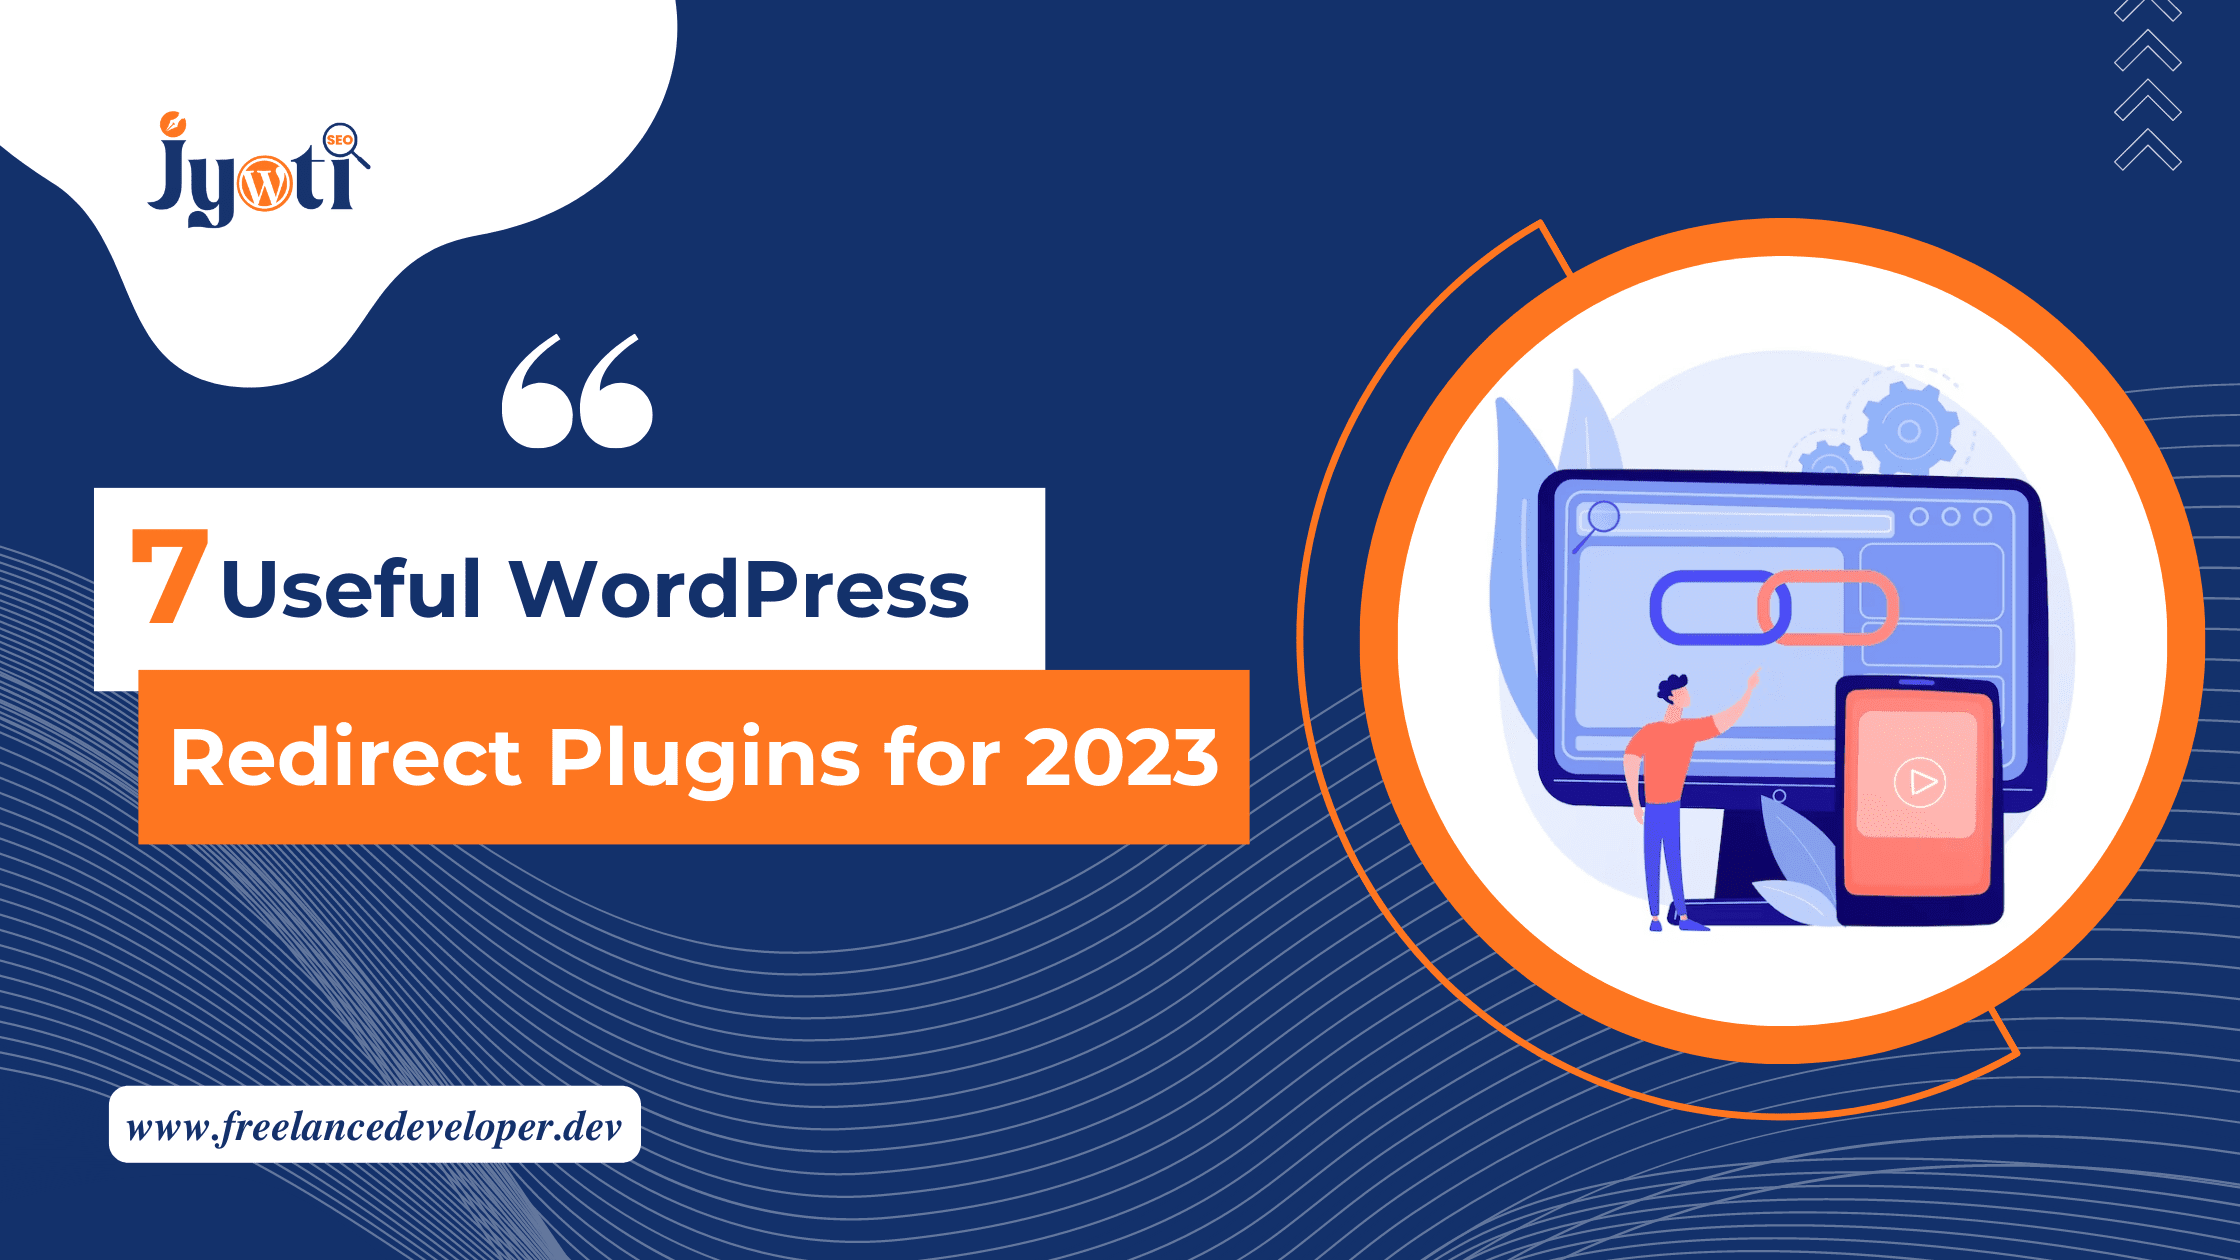 7 Useful WordPress Redirect Plugins for 2023